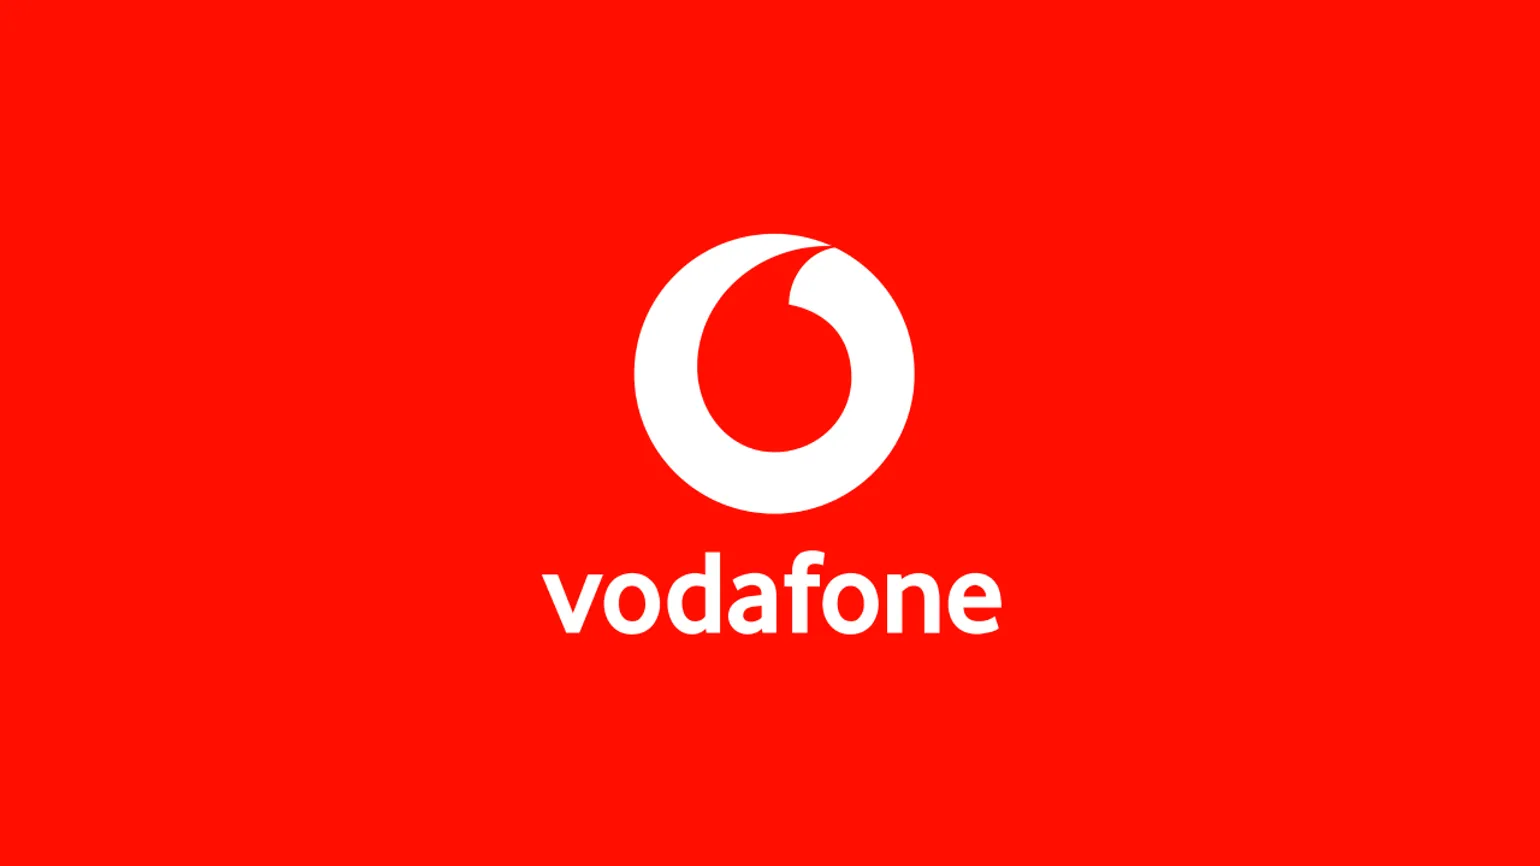 Vodafone price increases